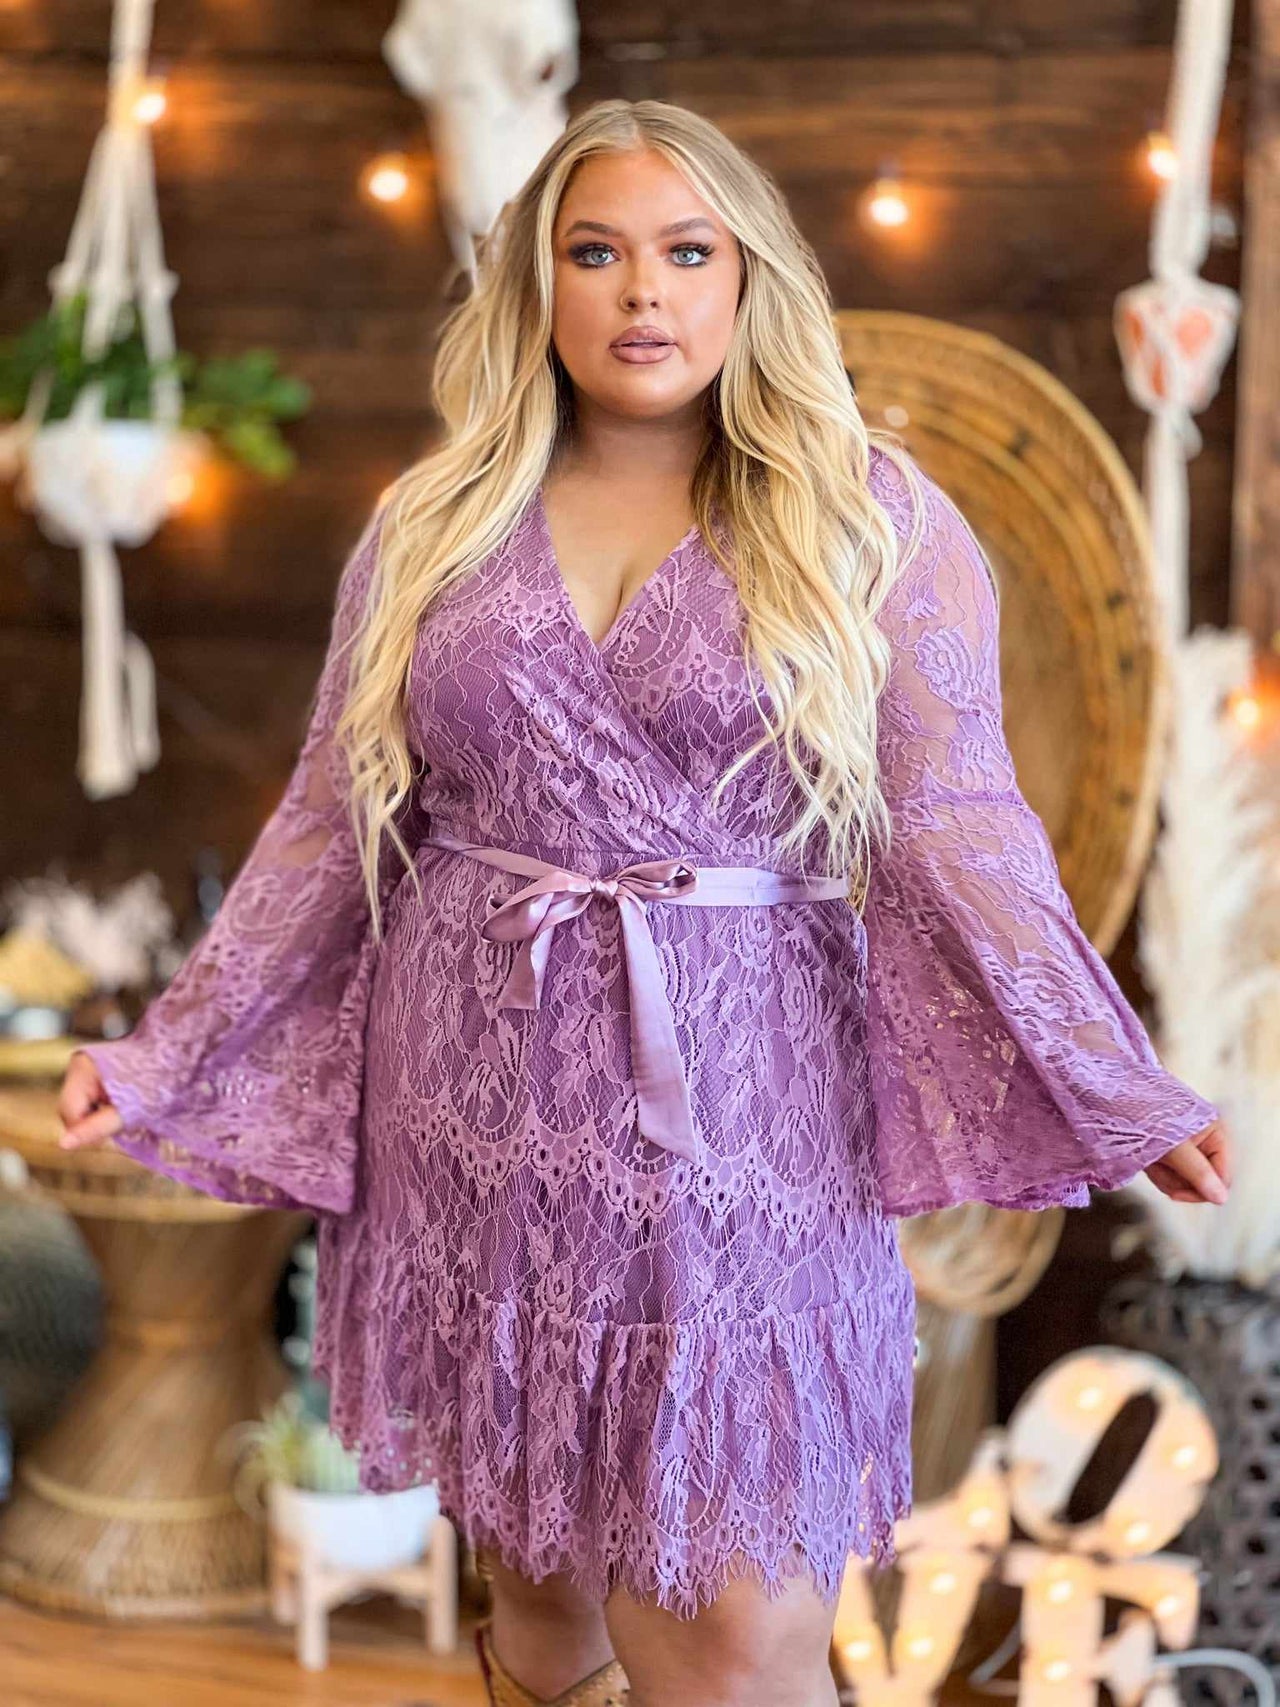 V-neck short lace dress in purple.